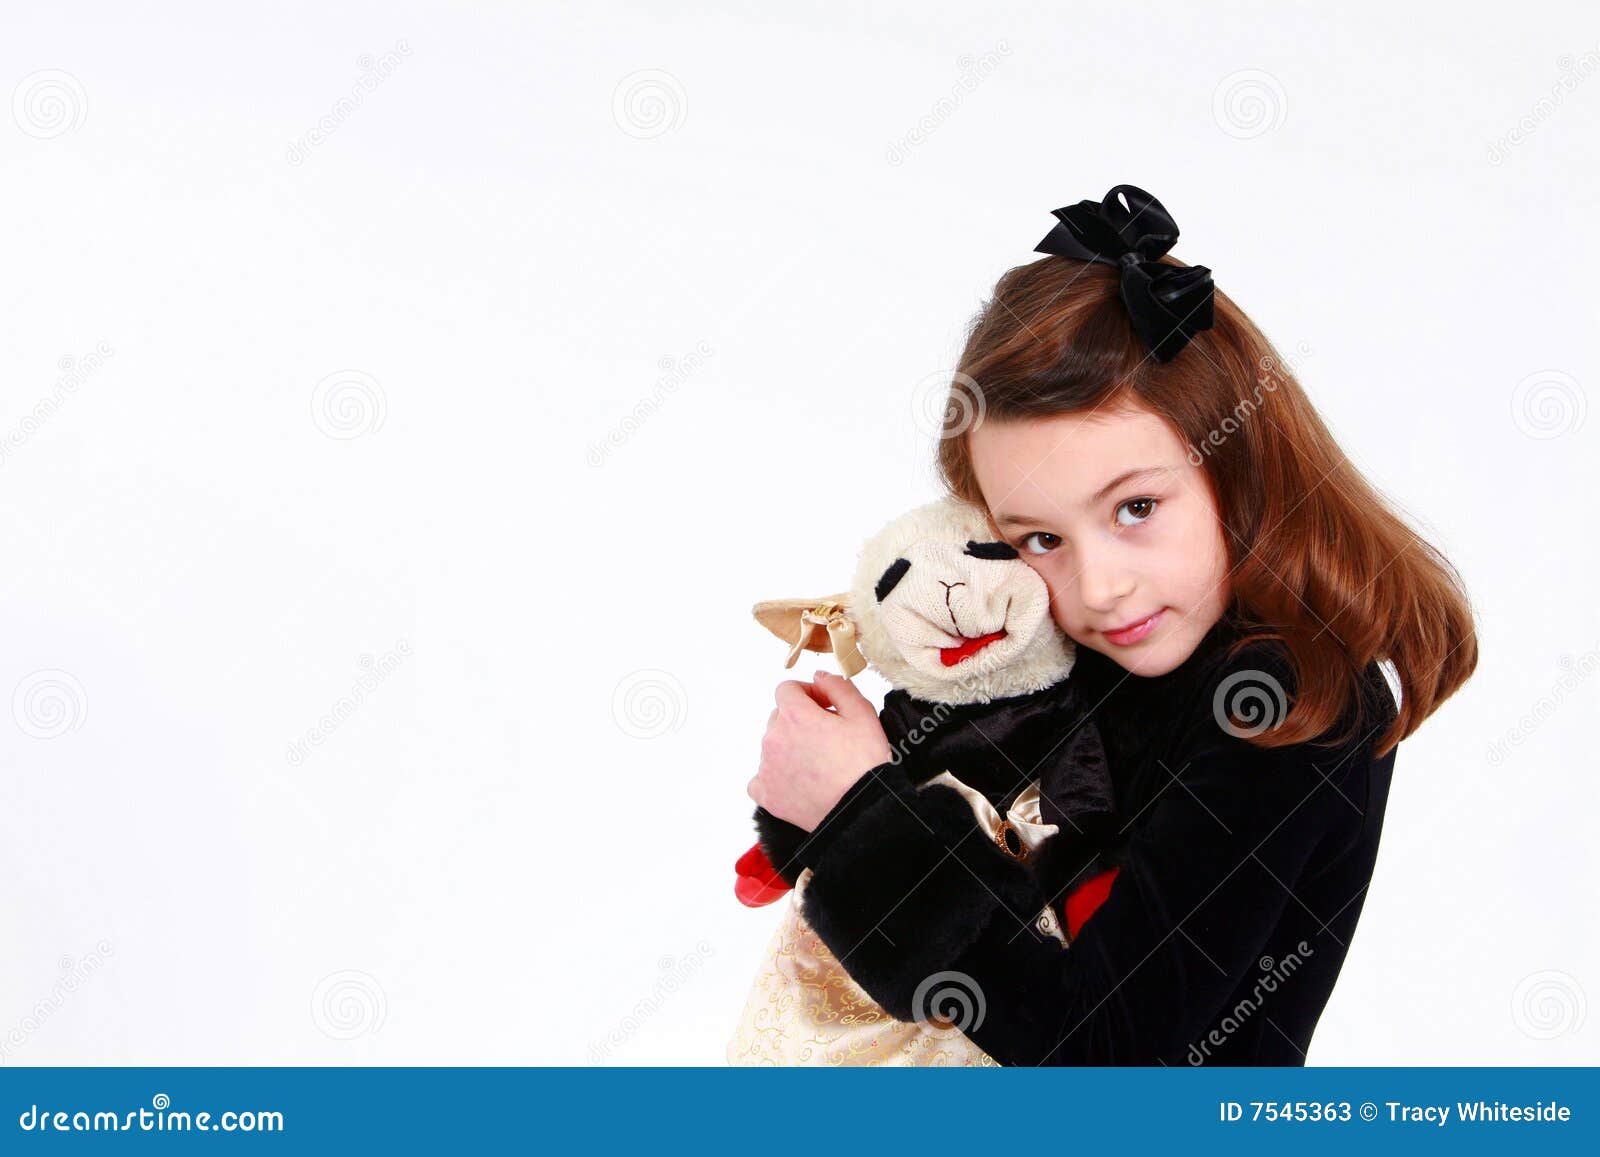 little-girl-stuffed-animal-7545363.jpg